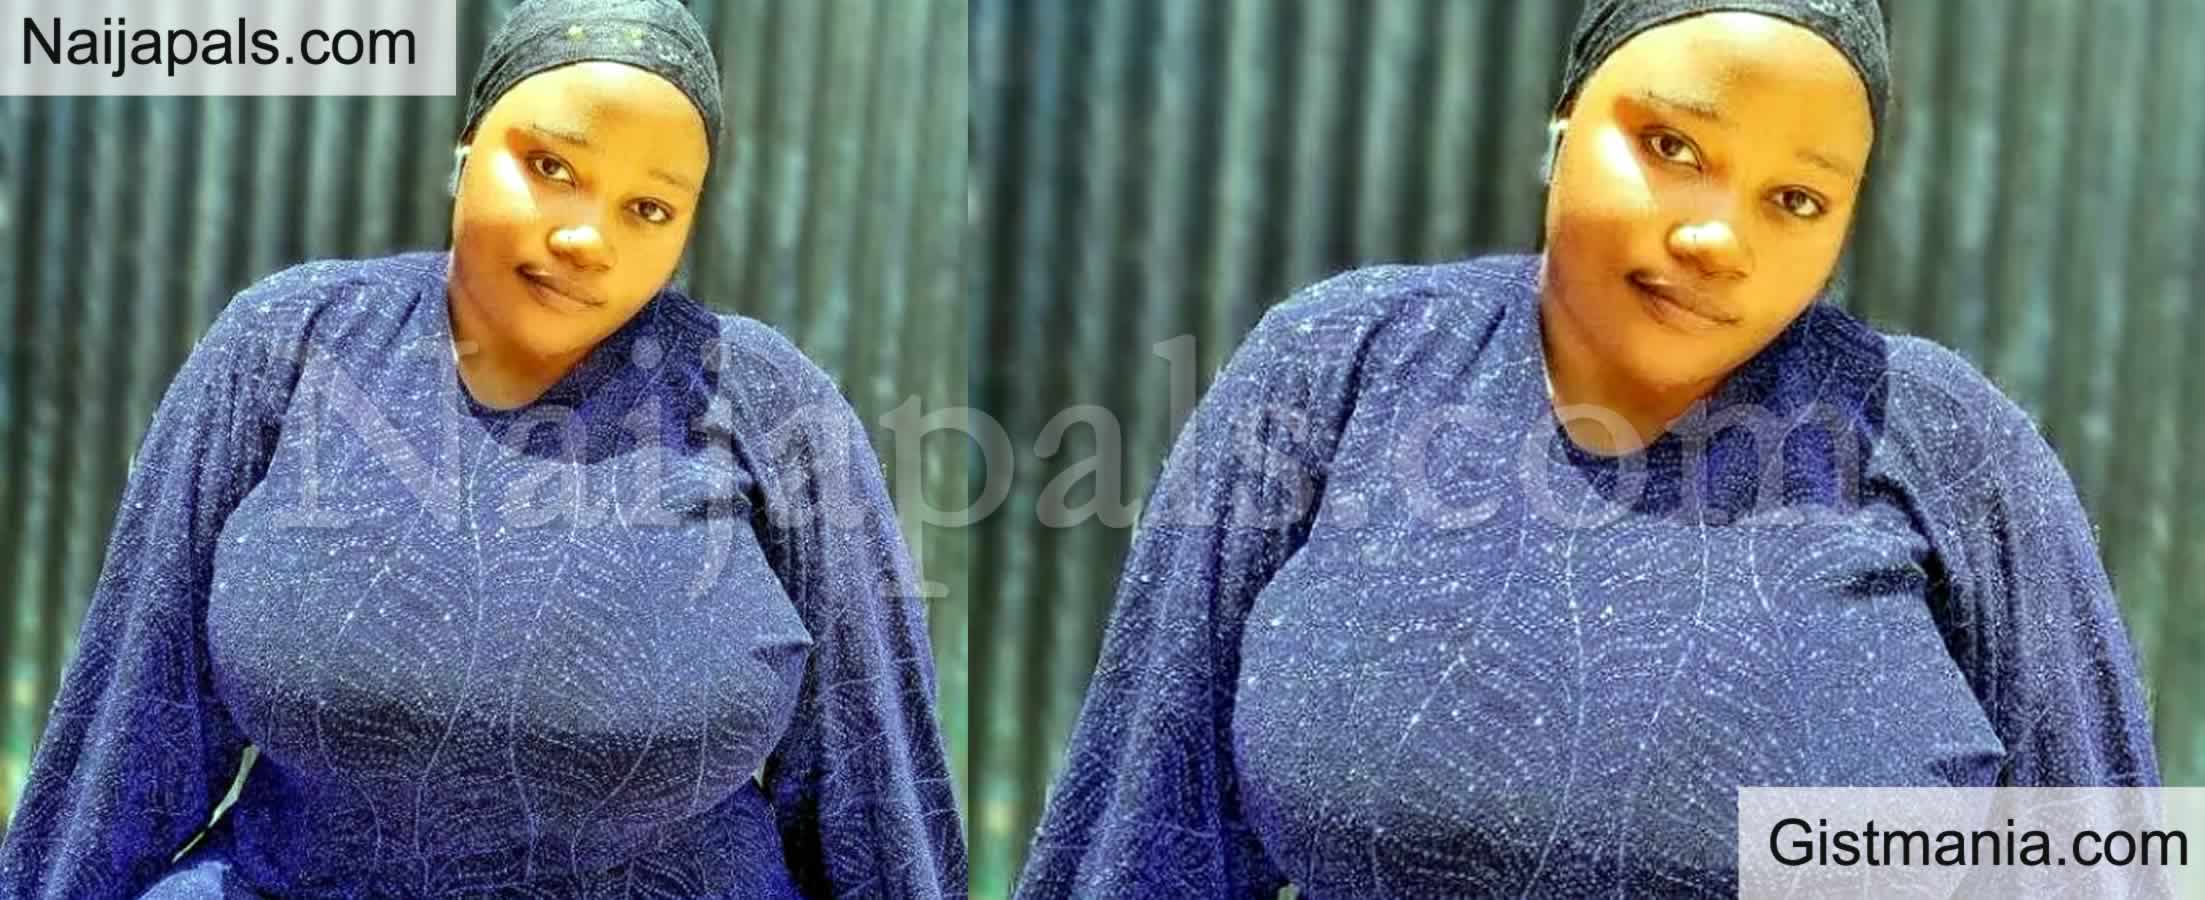 Just Bosom No Sense - Nigerians Blast A Lady After She Made